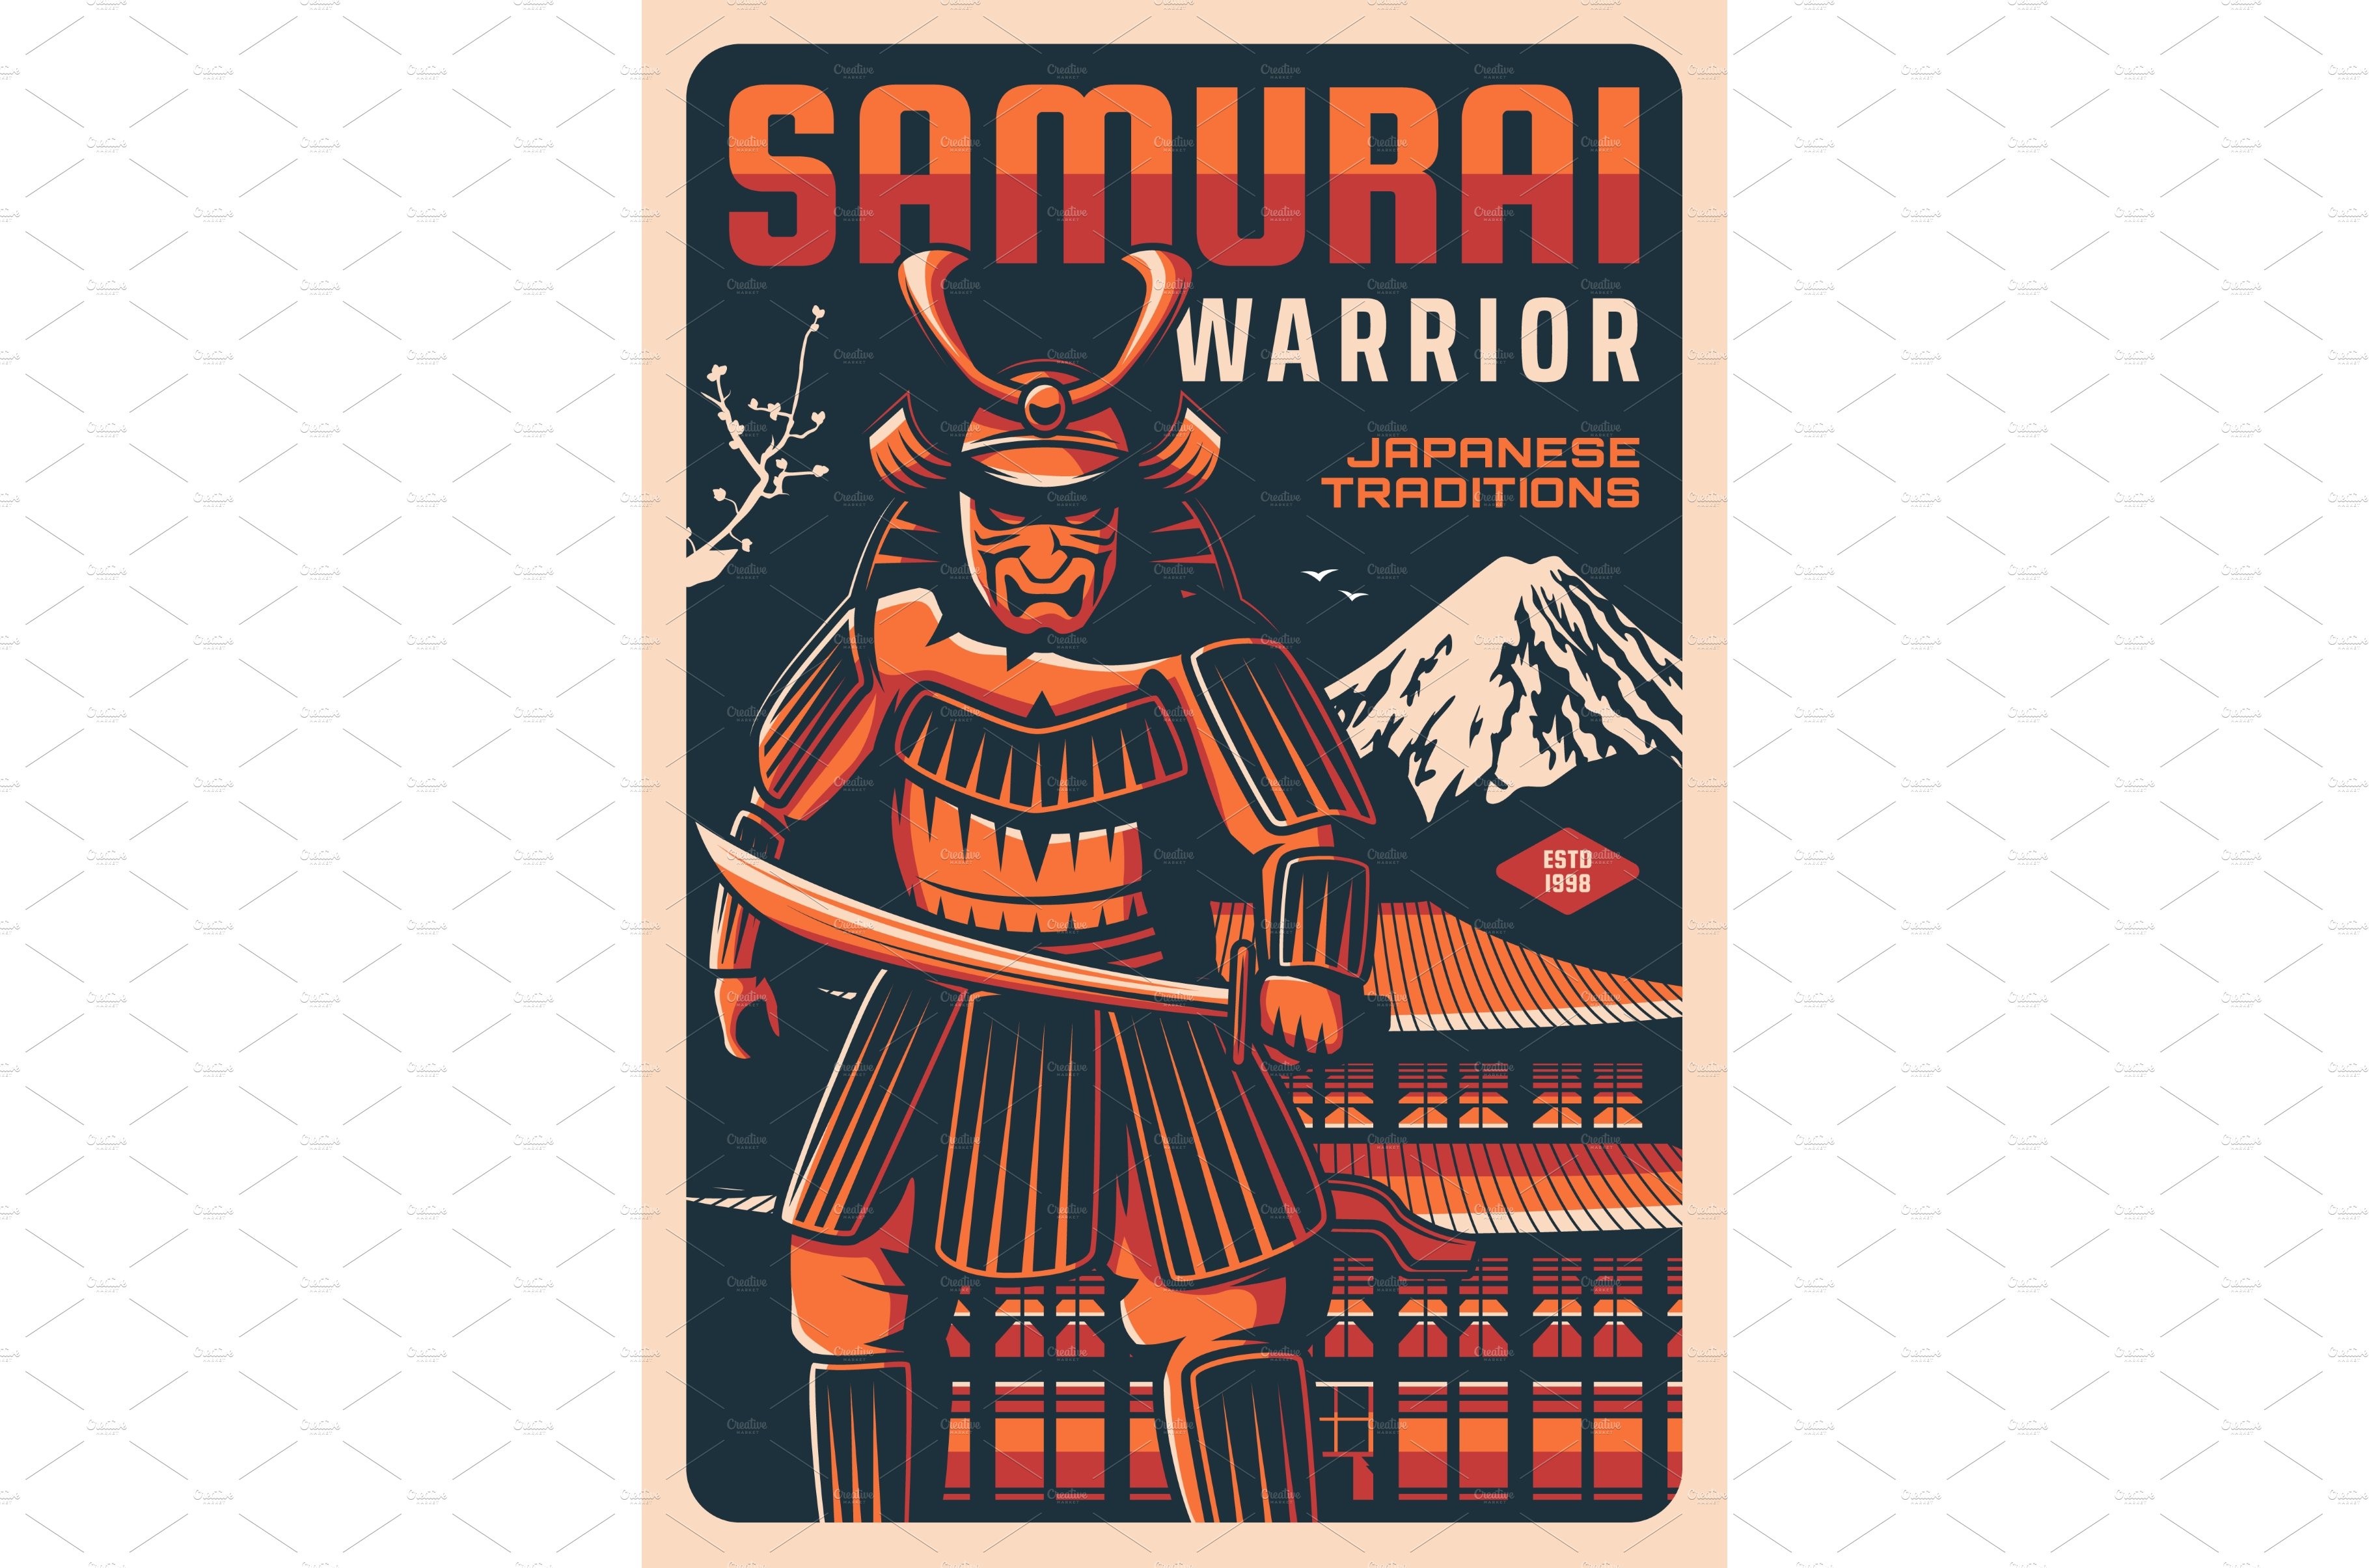 Samurai with sword, warrior cover image.